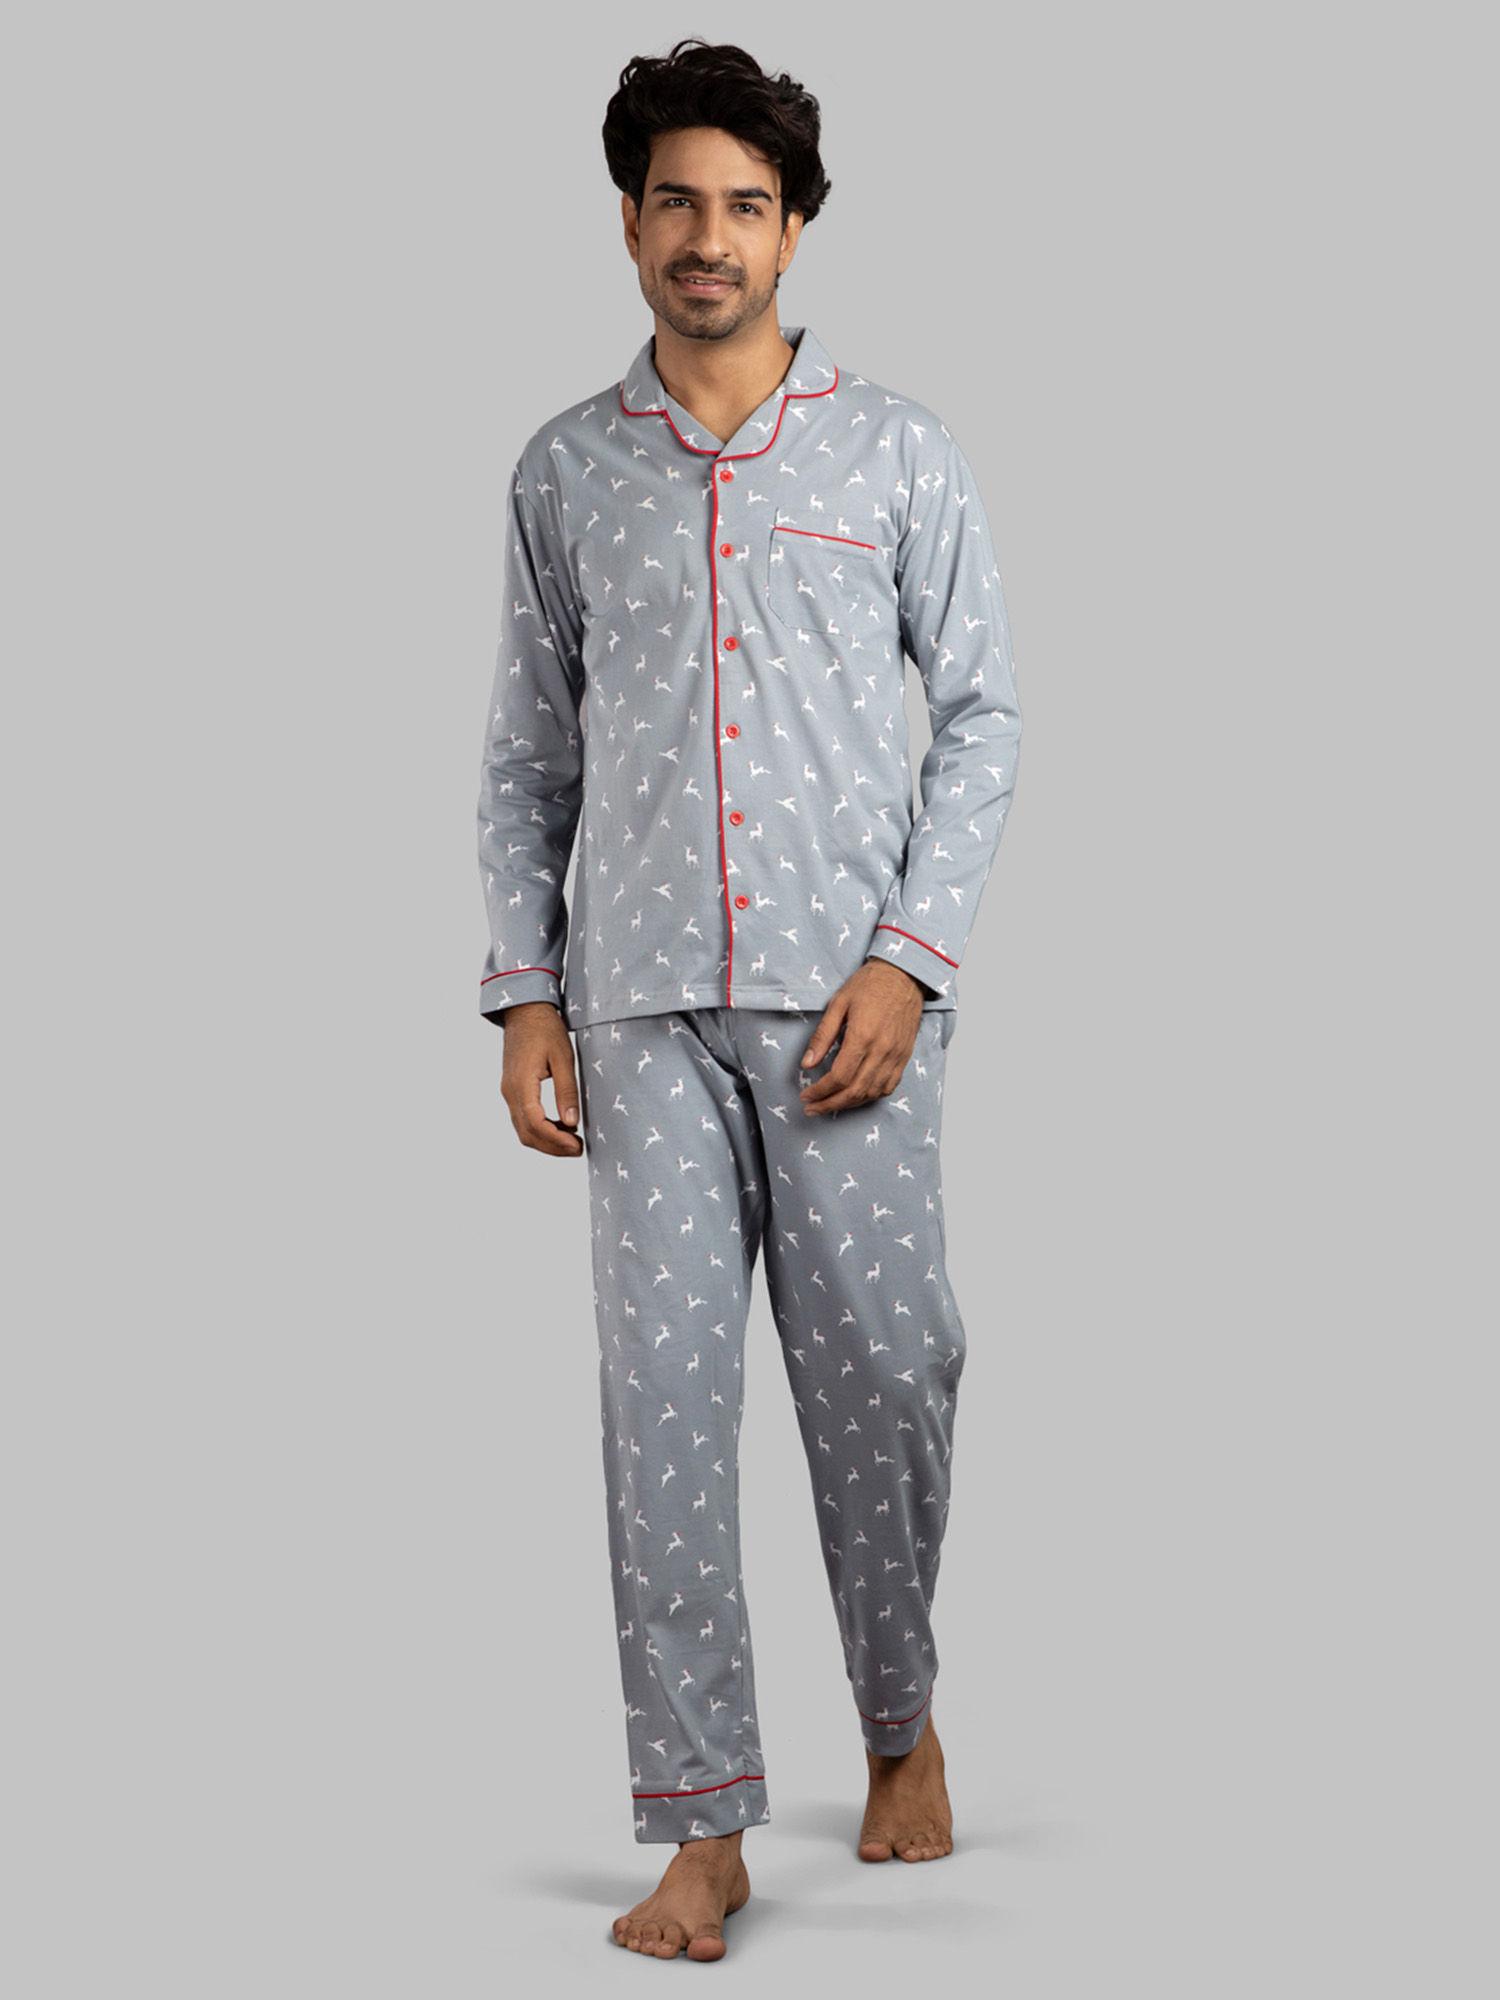 rudolph-the-reindeer-mens-pyjama-(set-of-2)-(l)